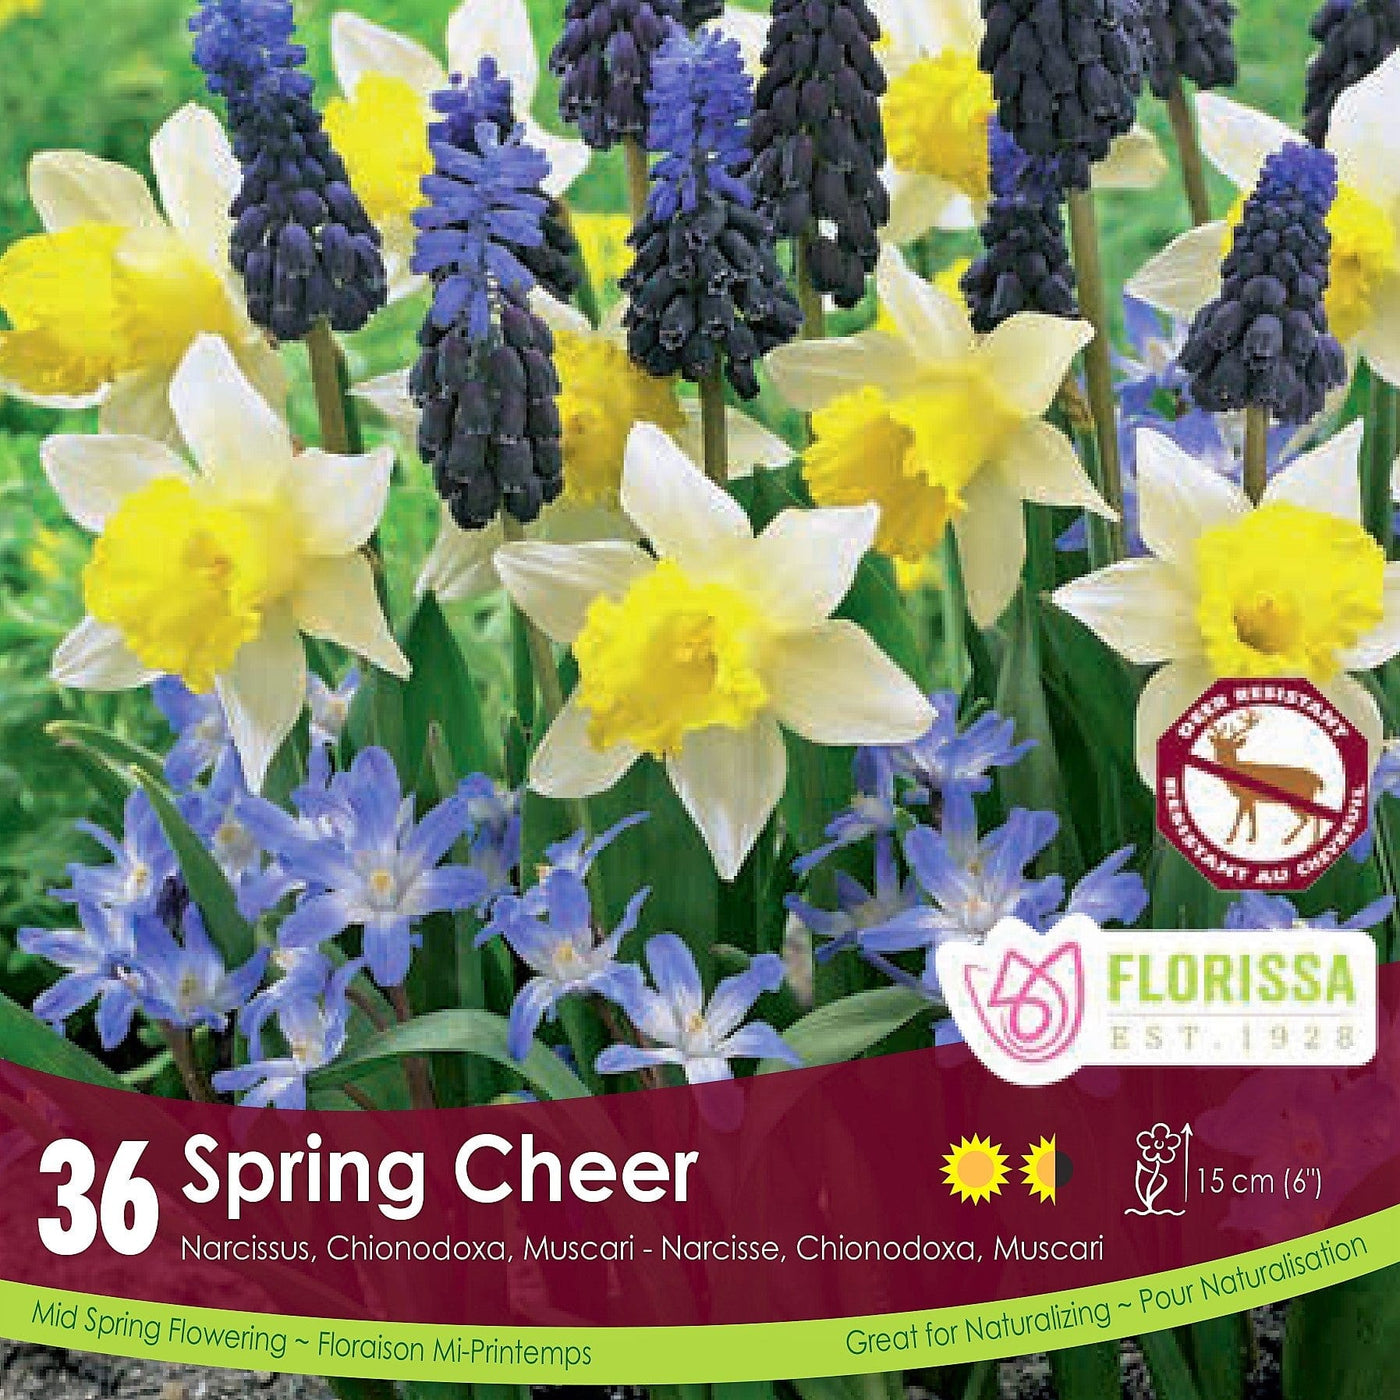 Narcissus, Chionodoxa, & Muscari Spring Cheer Yellow and purple